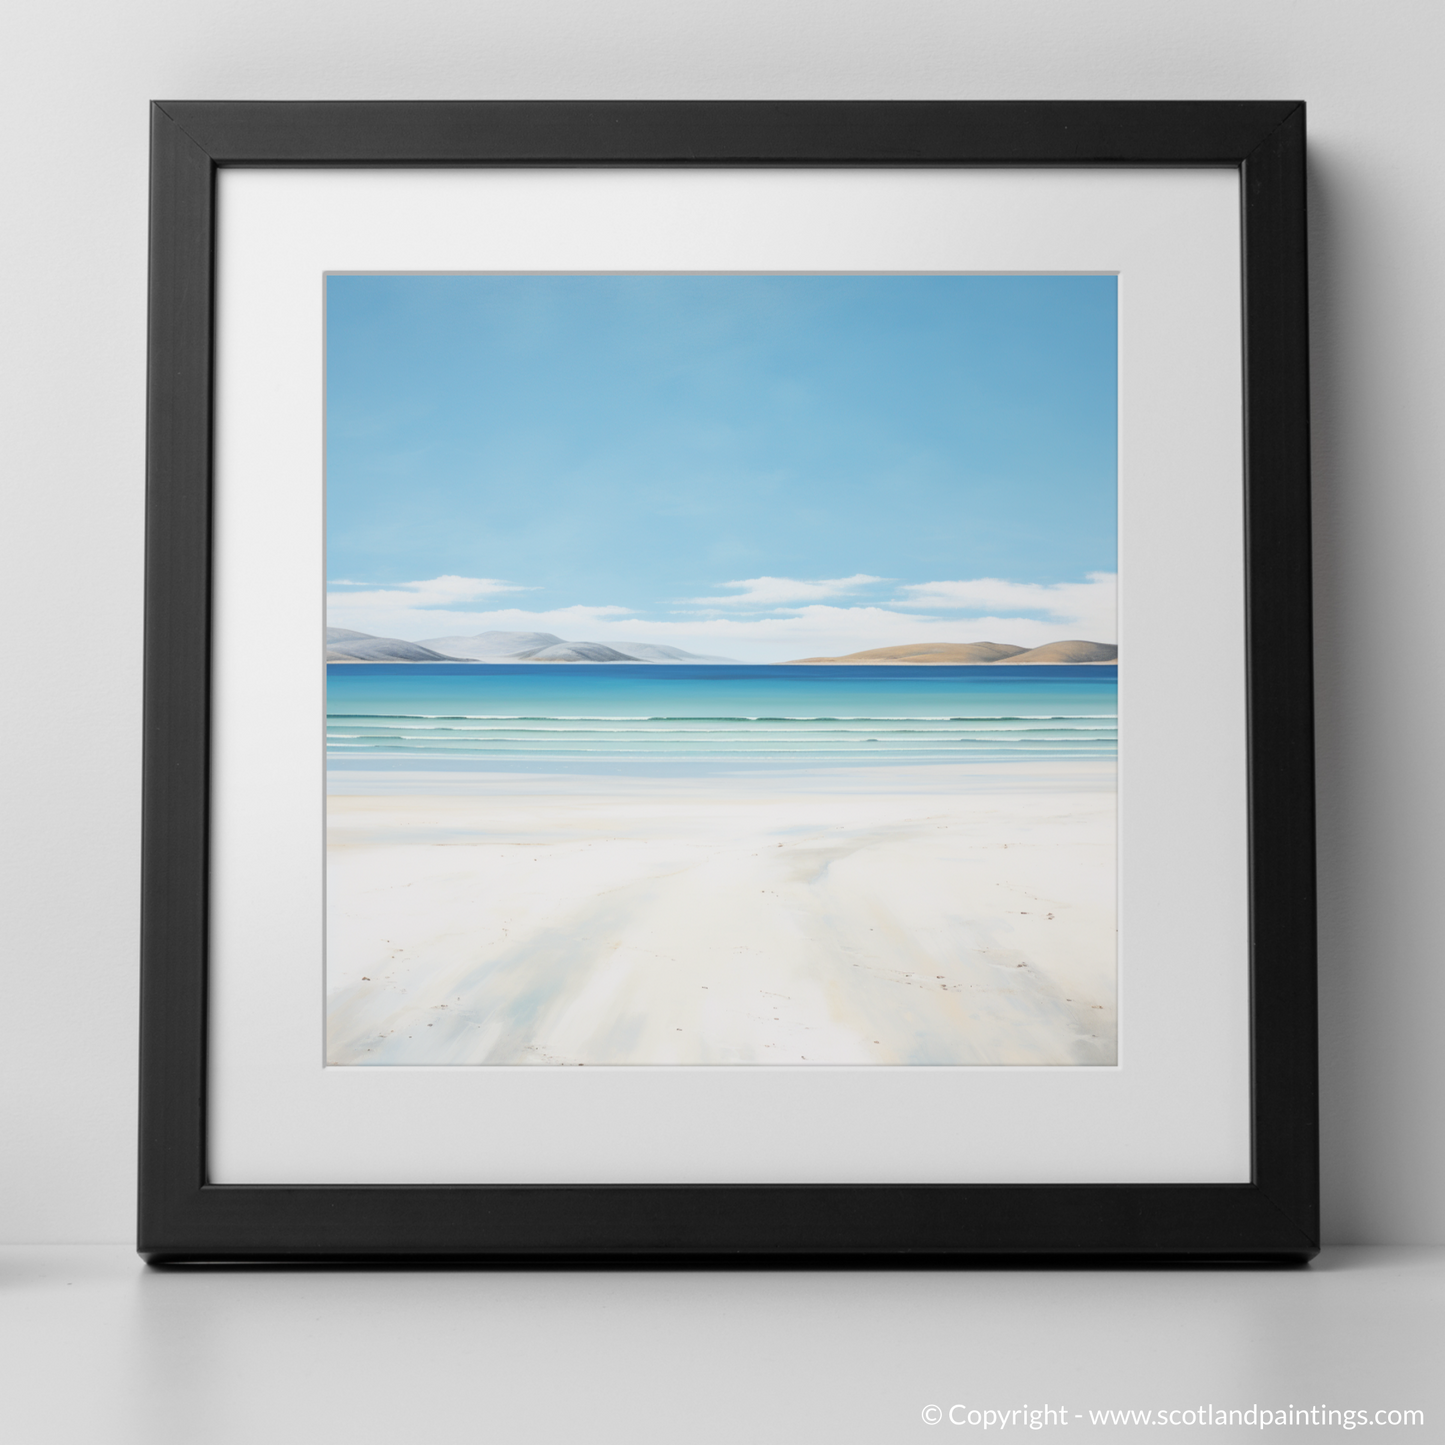 Art Print of Luskentyre Beach, Isle of Harris with a black frame